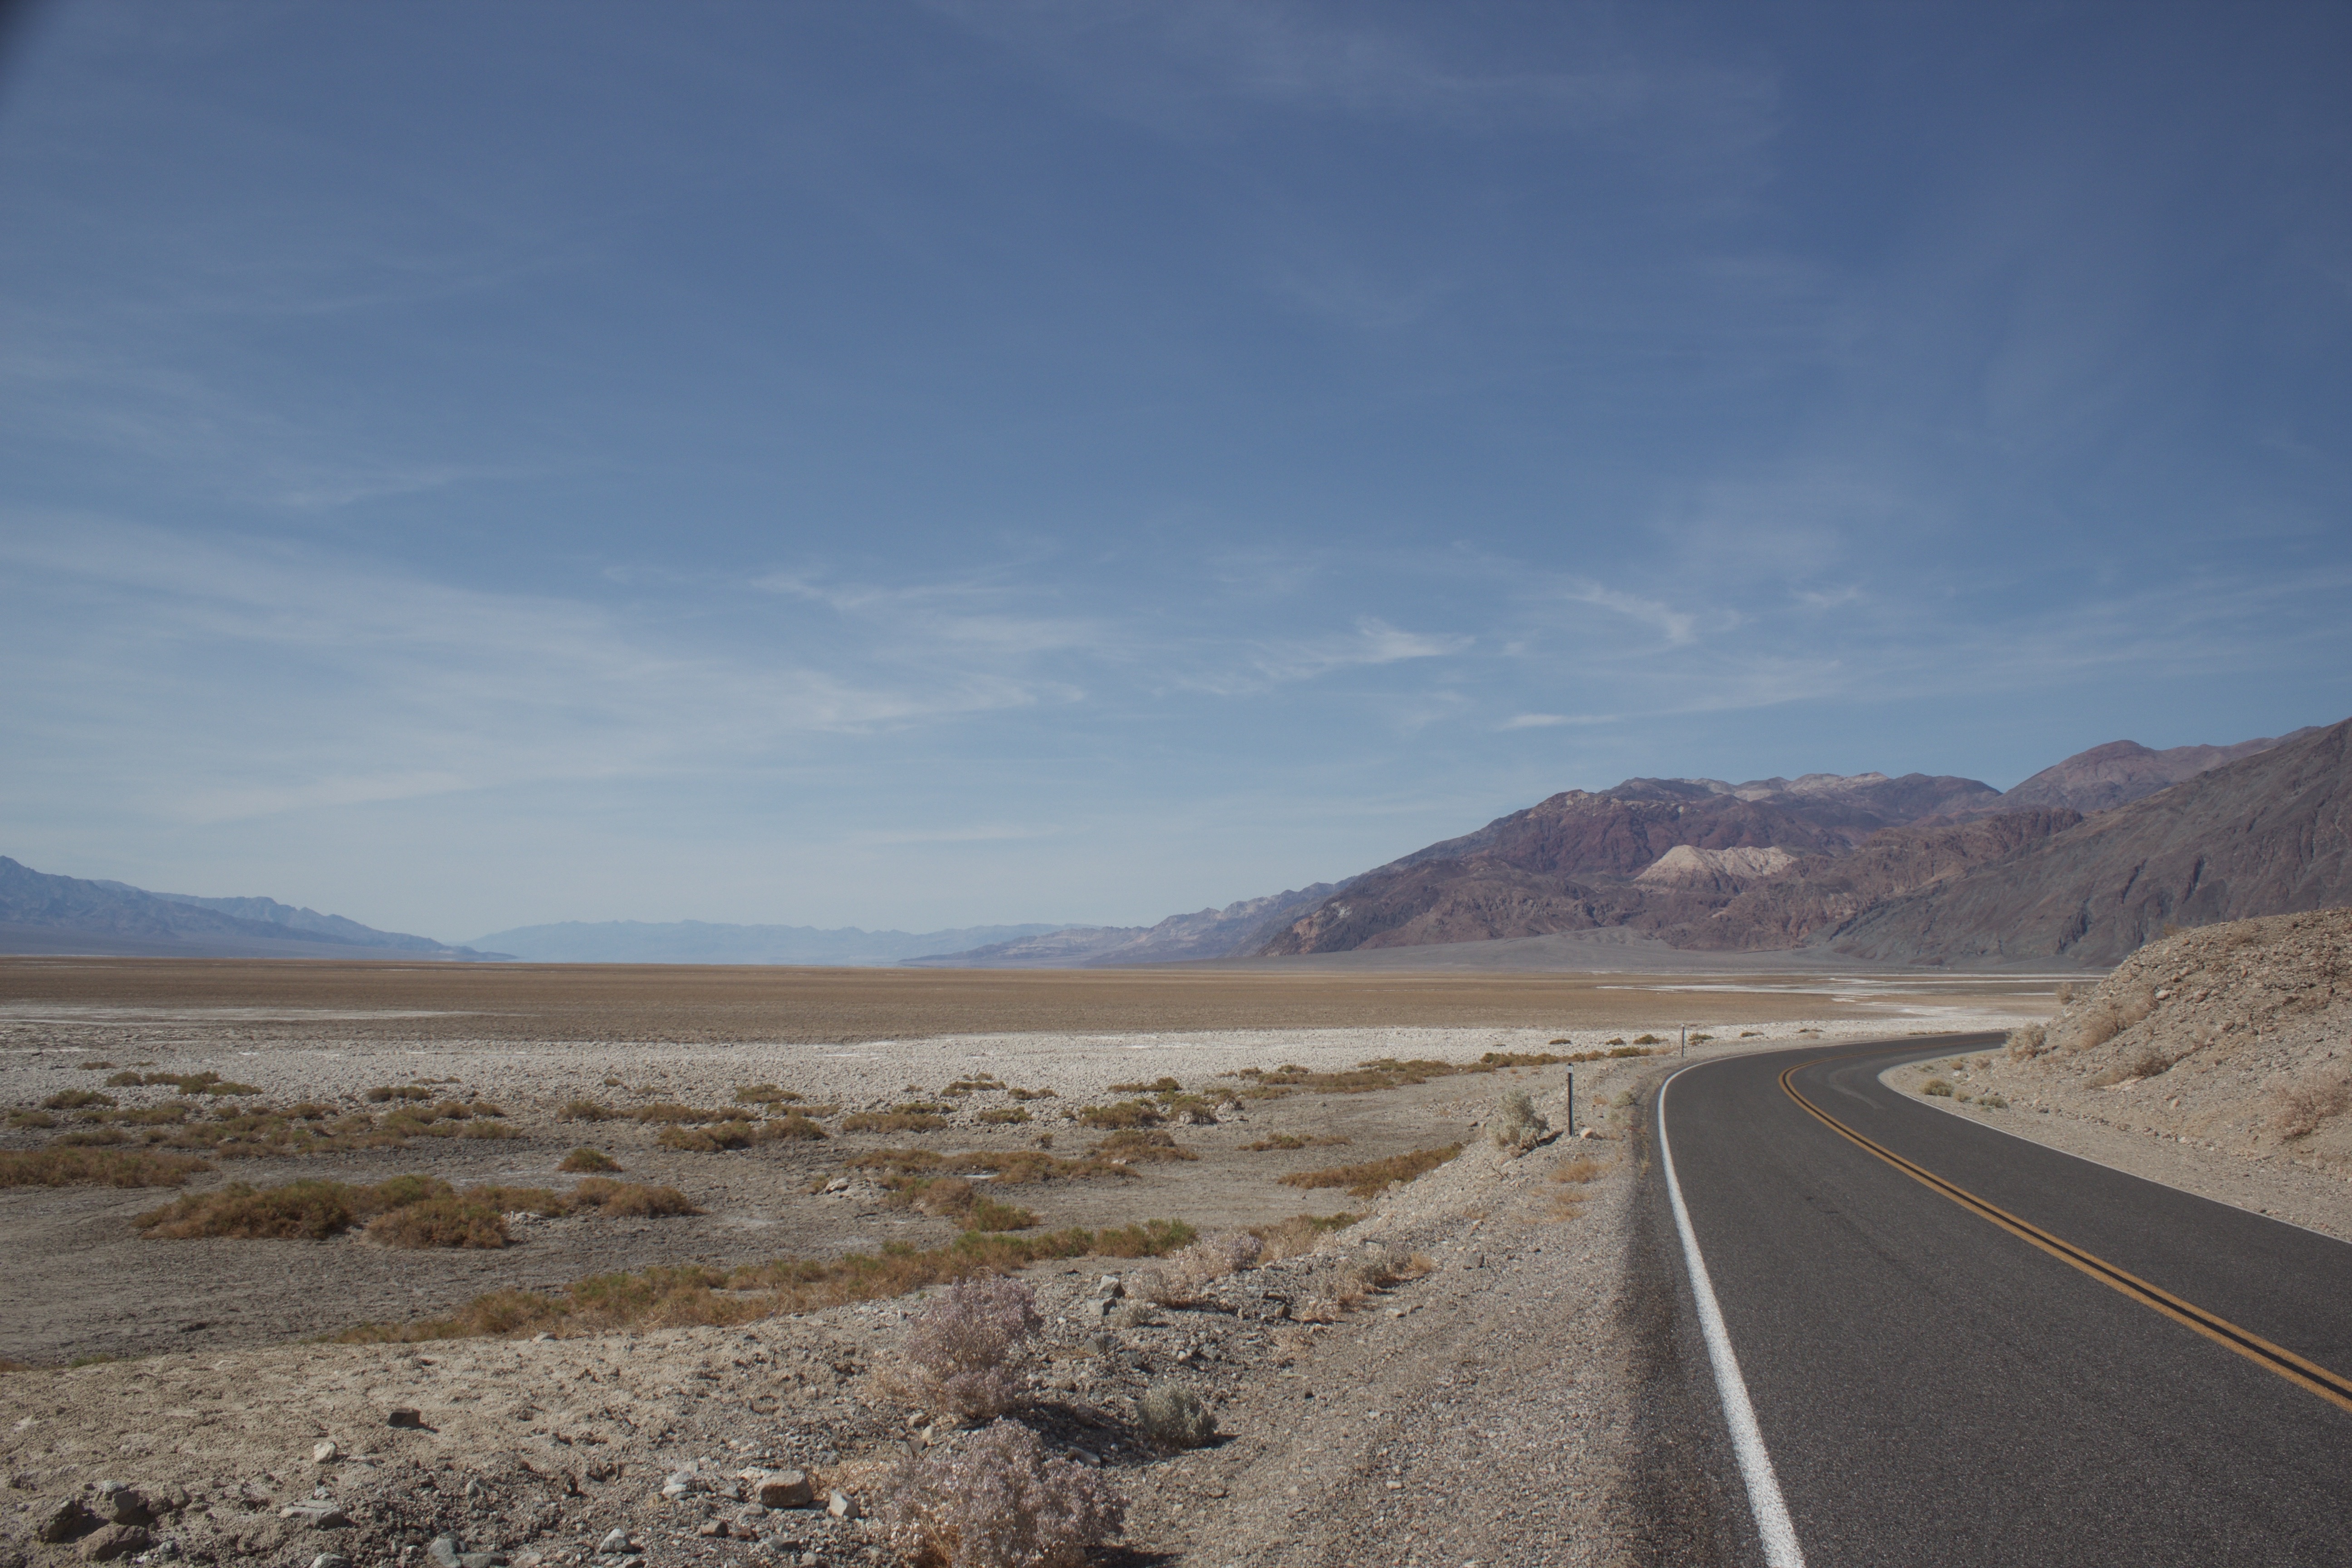 Долин время. Долина смерти Калифорния дорога. Калифорния пустынная дорога. Дорога в калифорнийской пустыне. Калифорния пустыня дорога 2006.